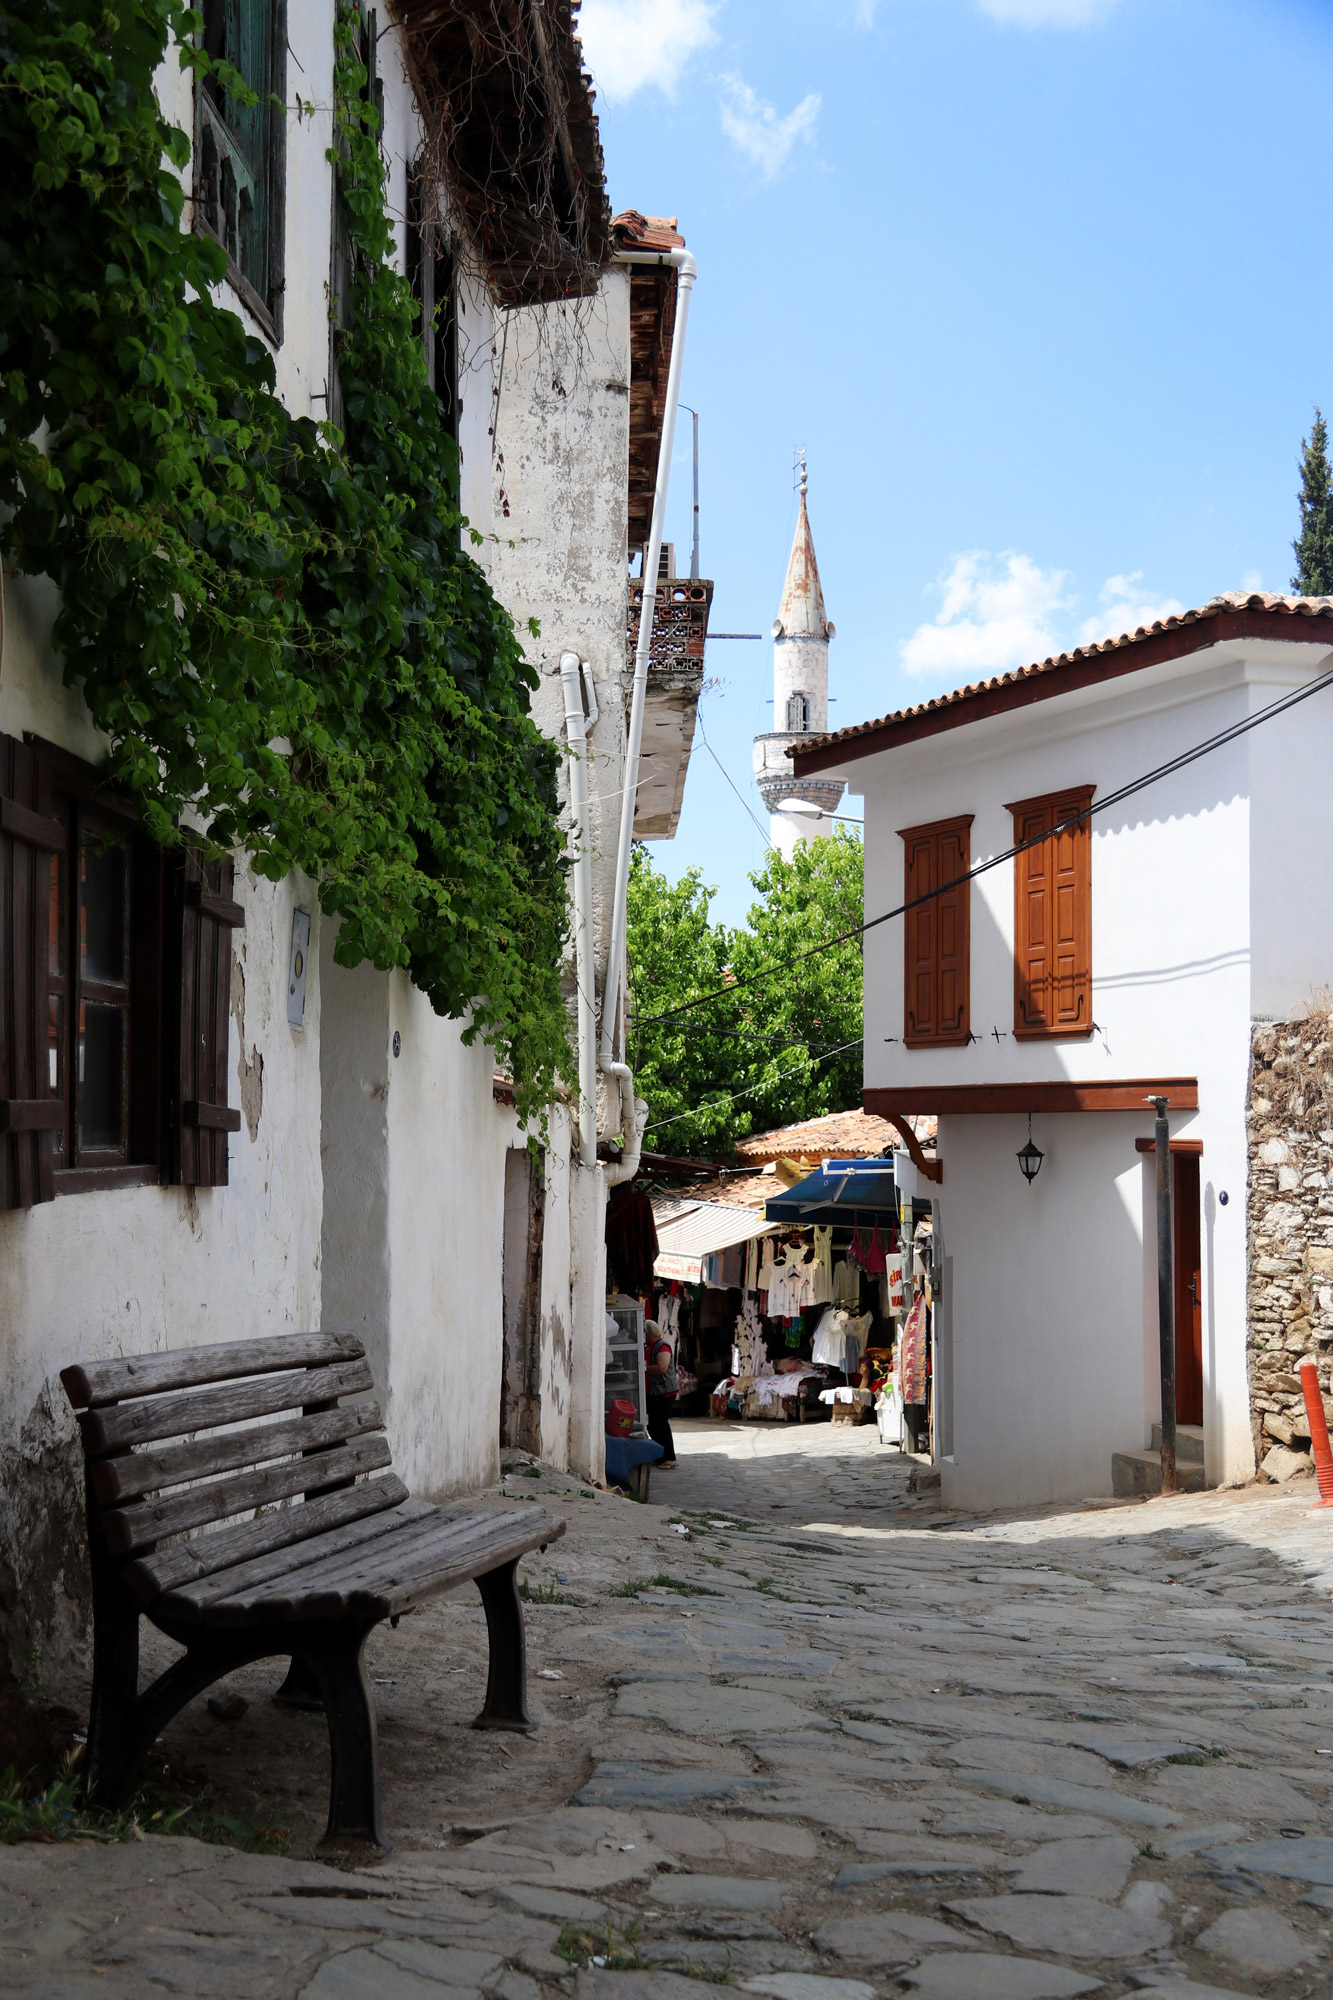 Turkije reisverslag: Efeze en Şirince - Sfeervolle straatjes